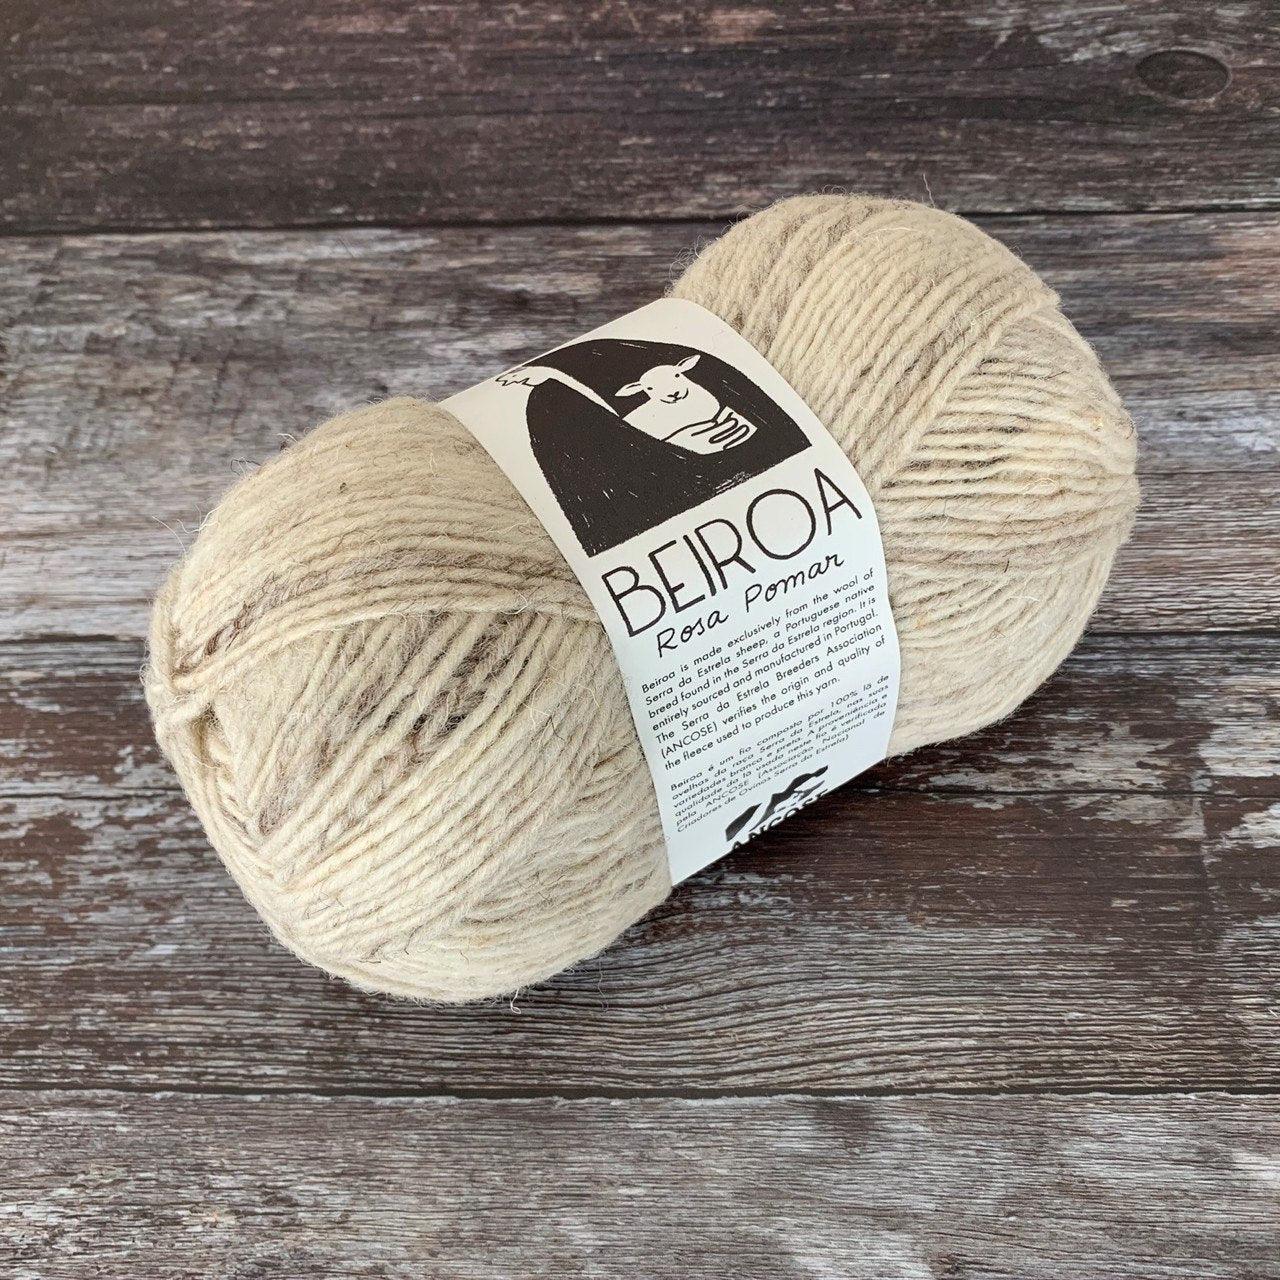 Retrosaria Retrosaria Beiroa - 401 - Worsted Knitting Yarn